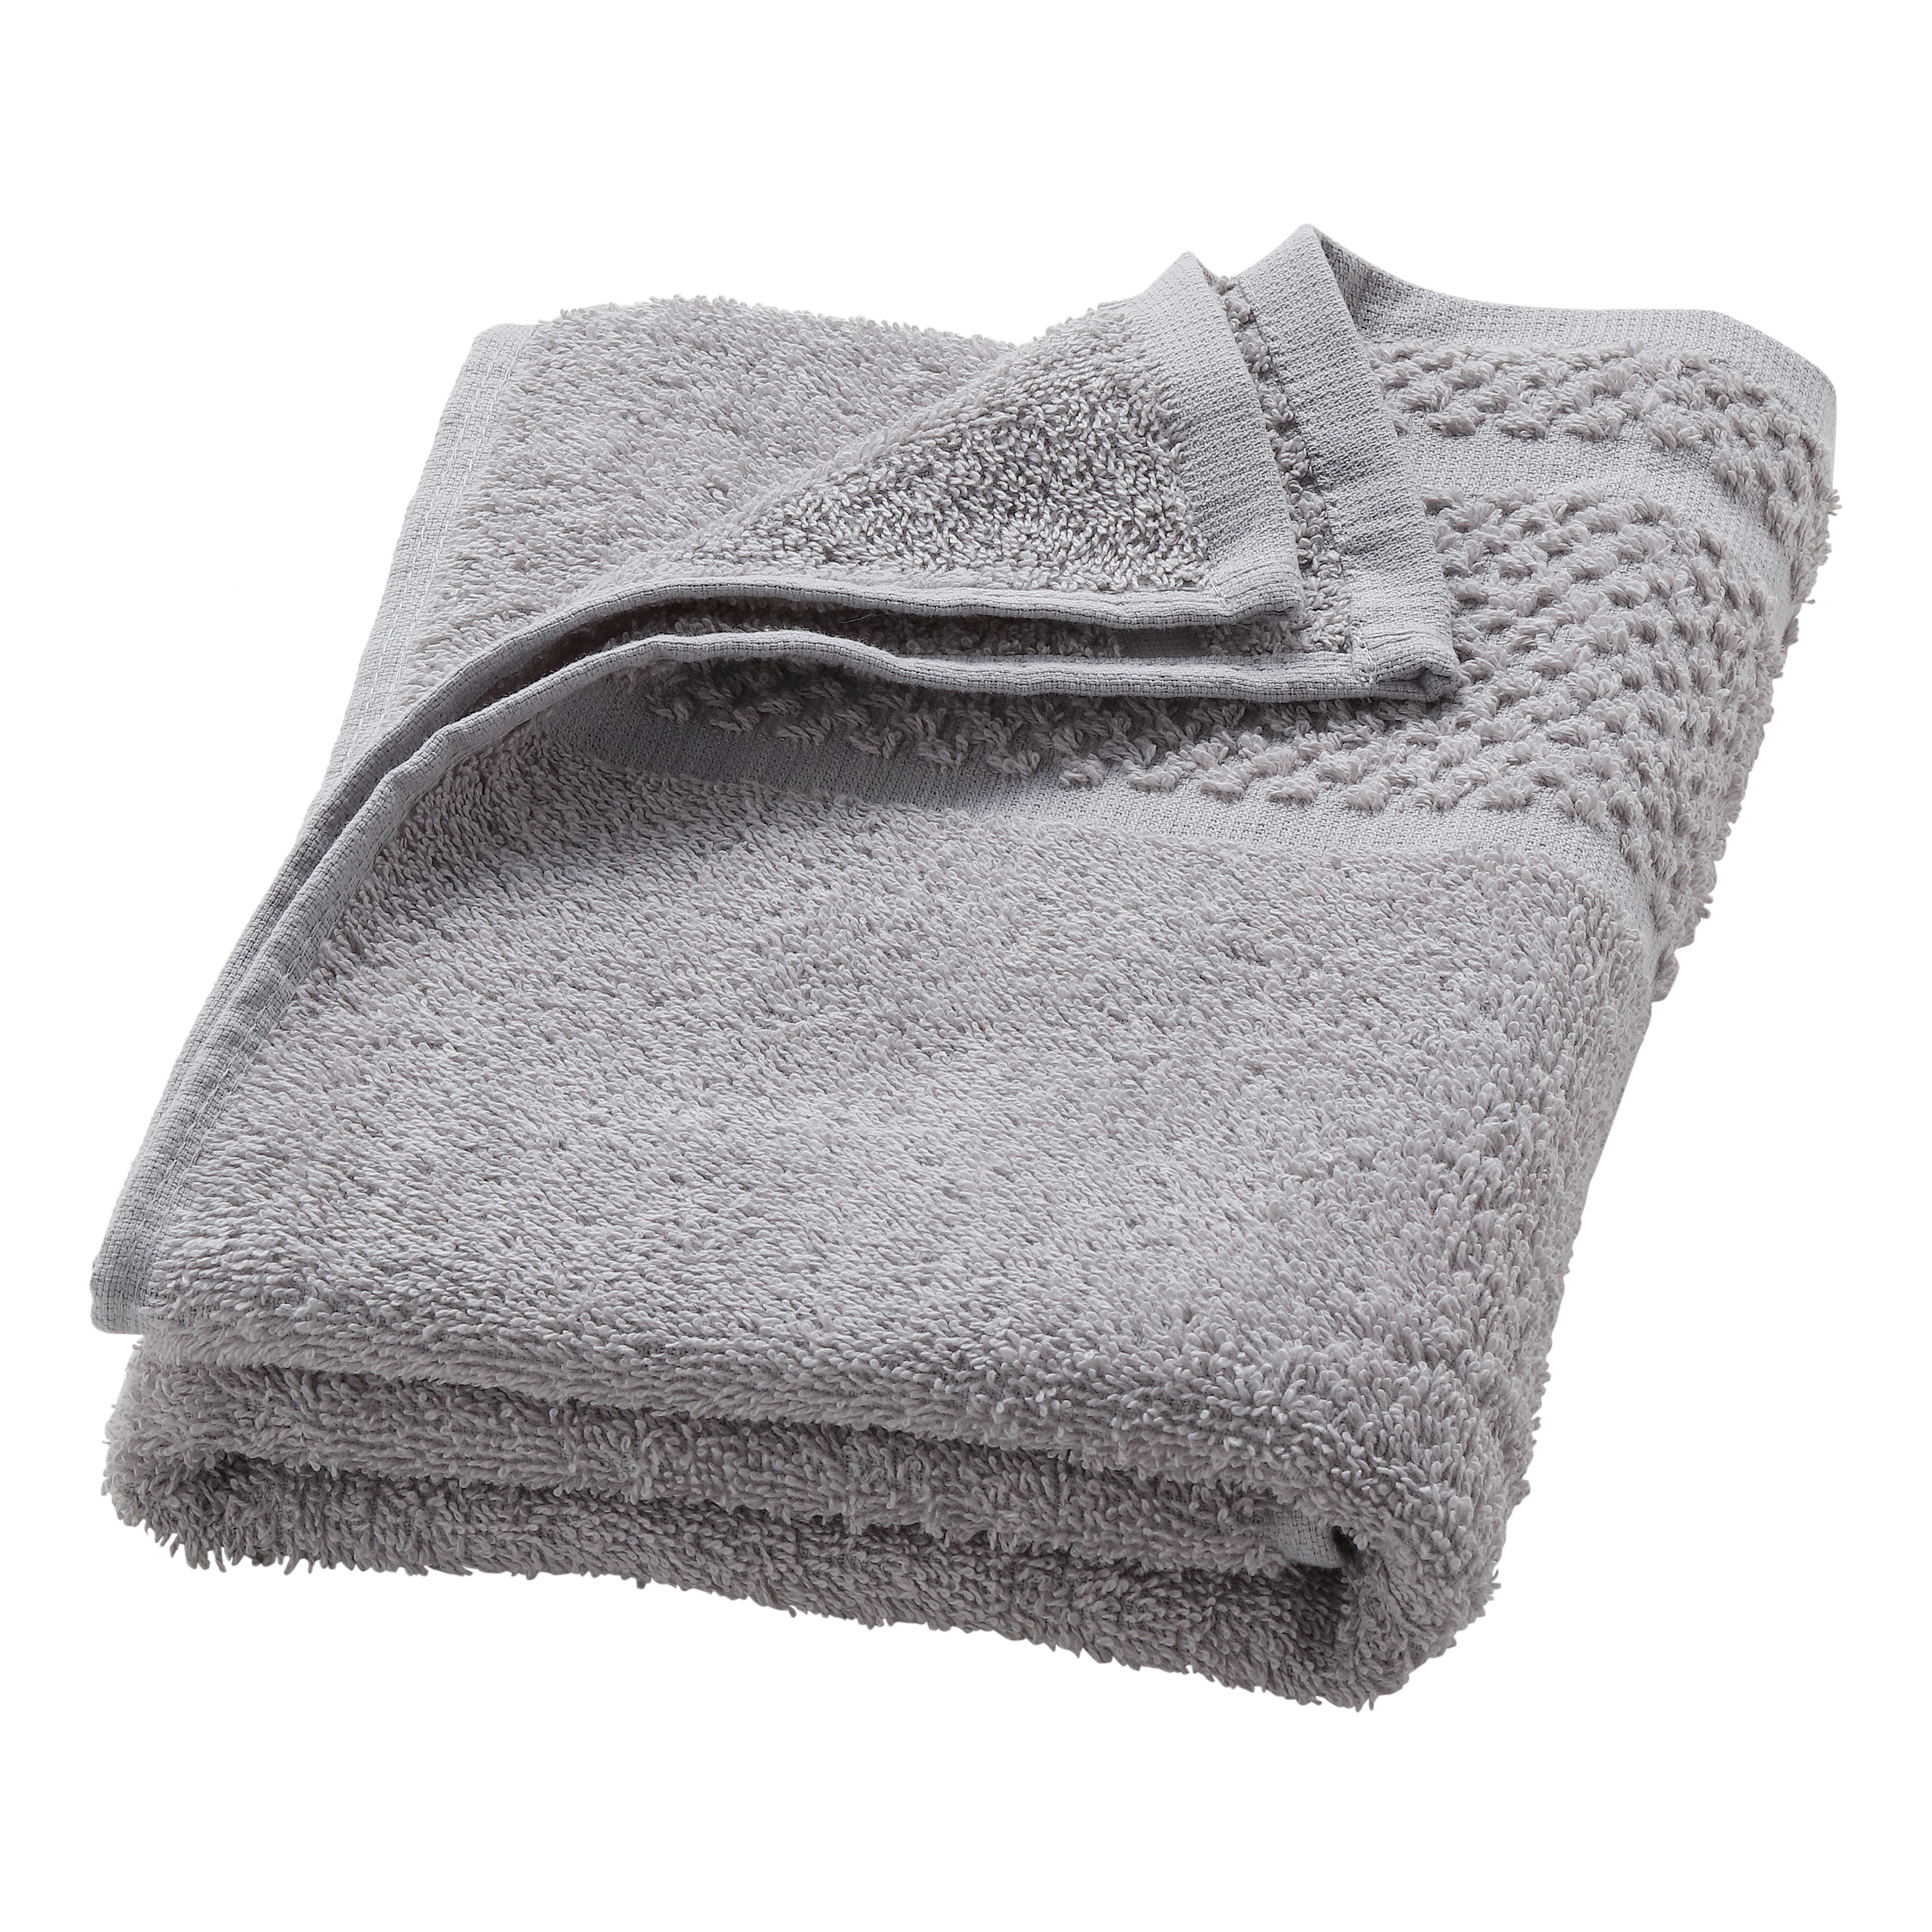 Mainstays 10 Piece Bath Towel Set with Upgraded Softness & Durability, Gray - image 4 of 7